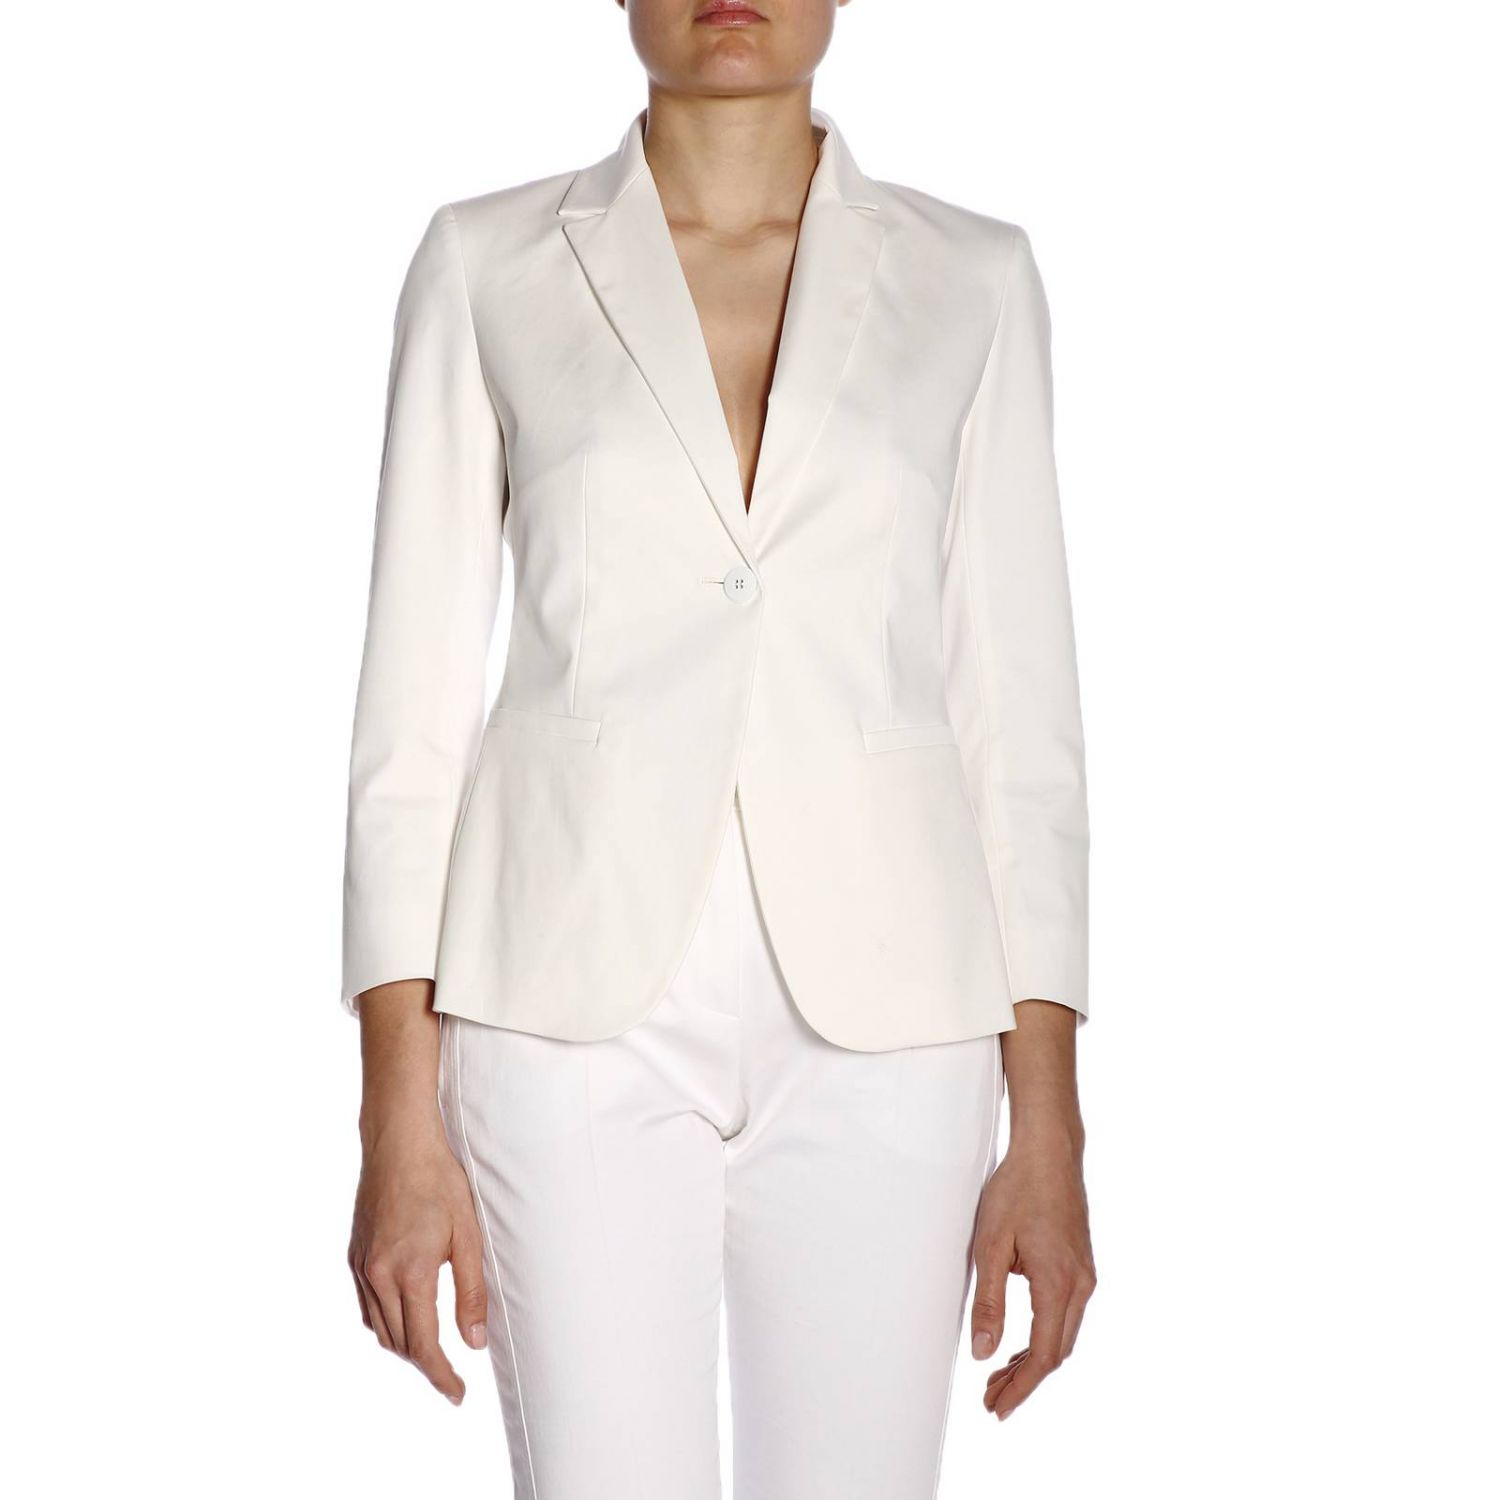 Max Mara Outlet: jacket for woman - White | Max Mara jacket 60410291000 ...